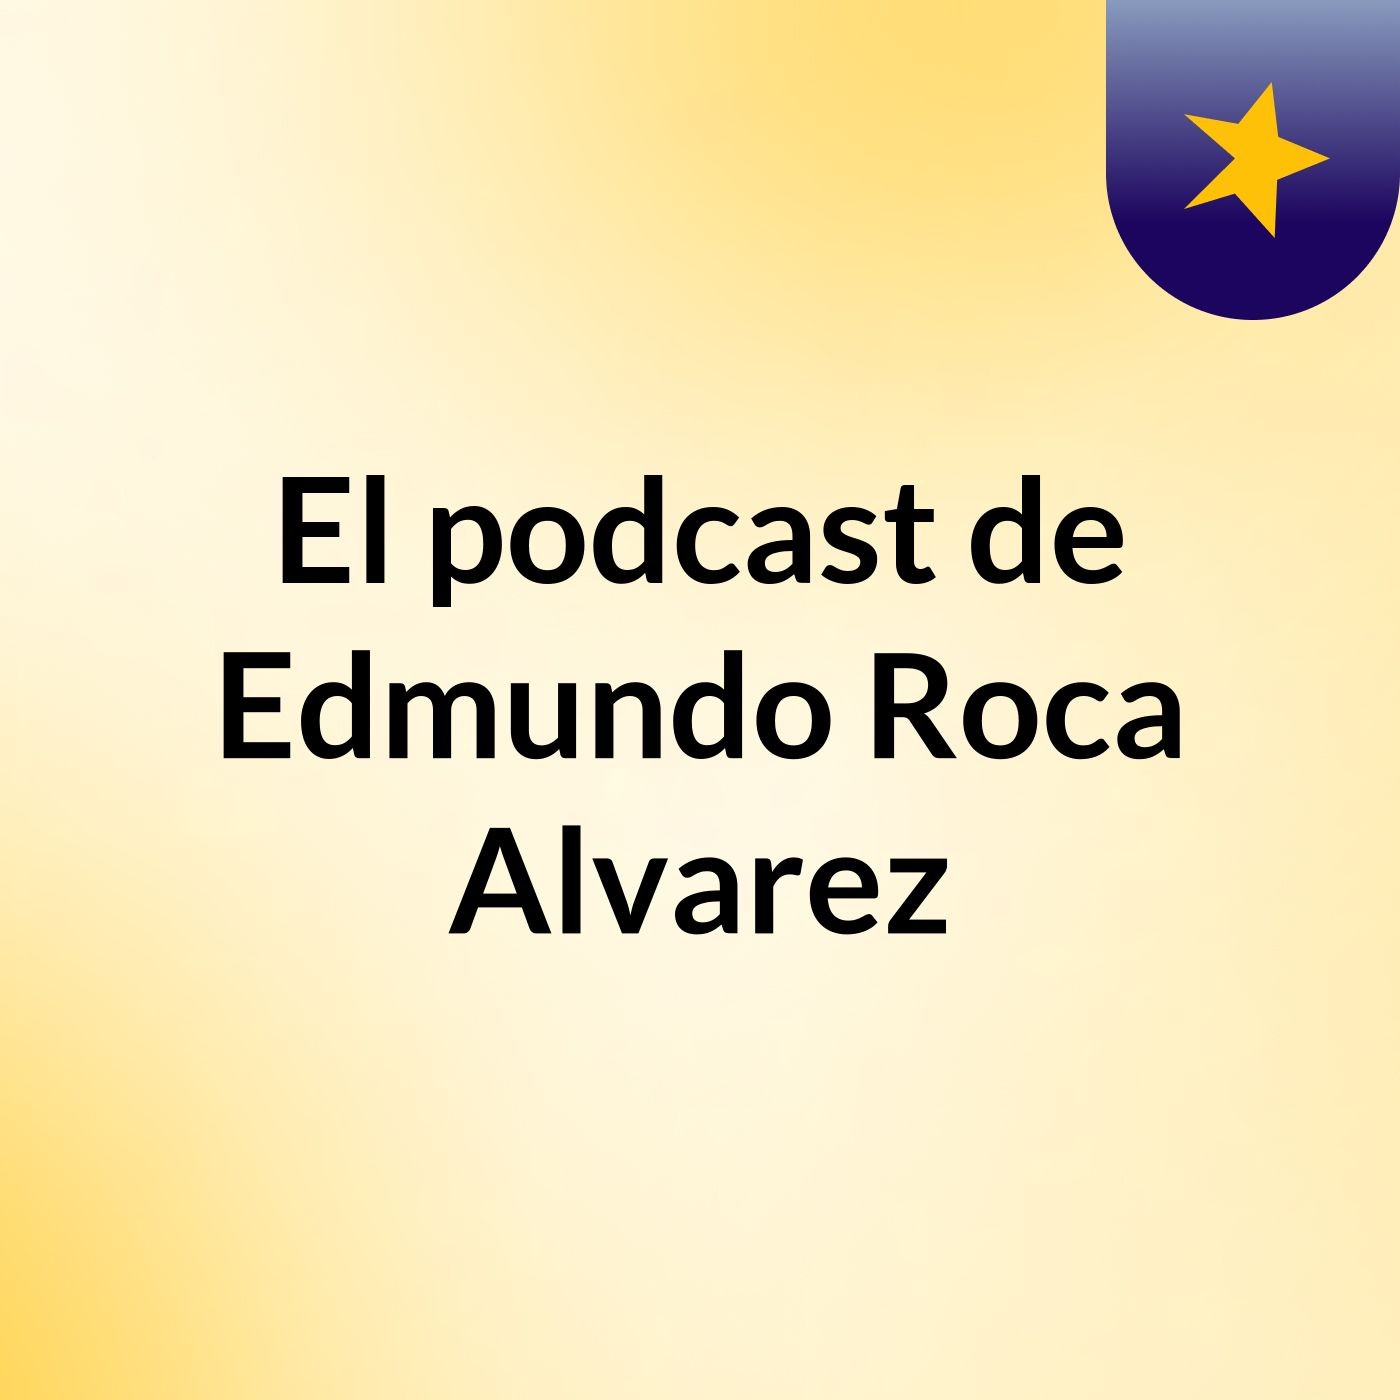 Episodio 5 - El podcast de Edmundo Roca Alvarez